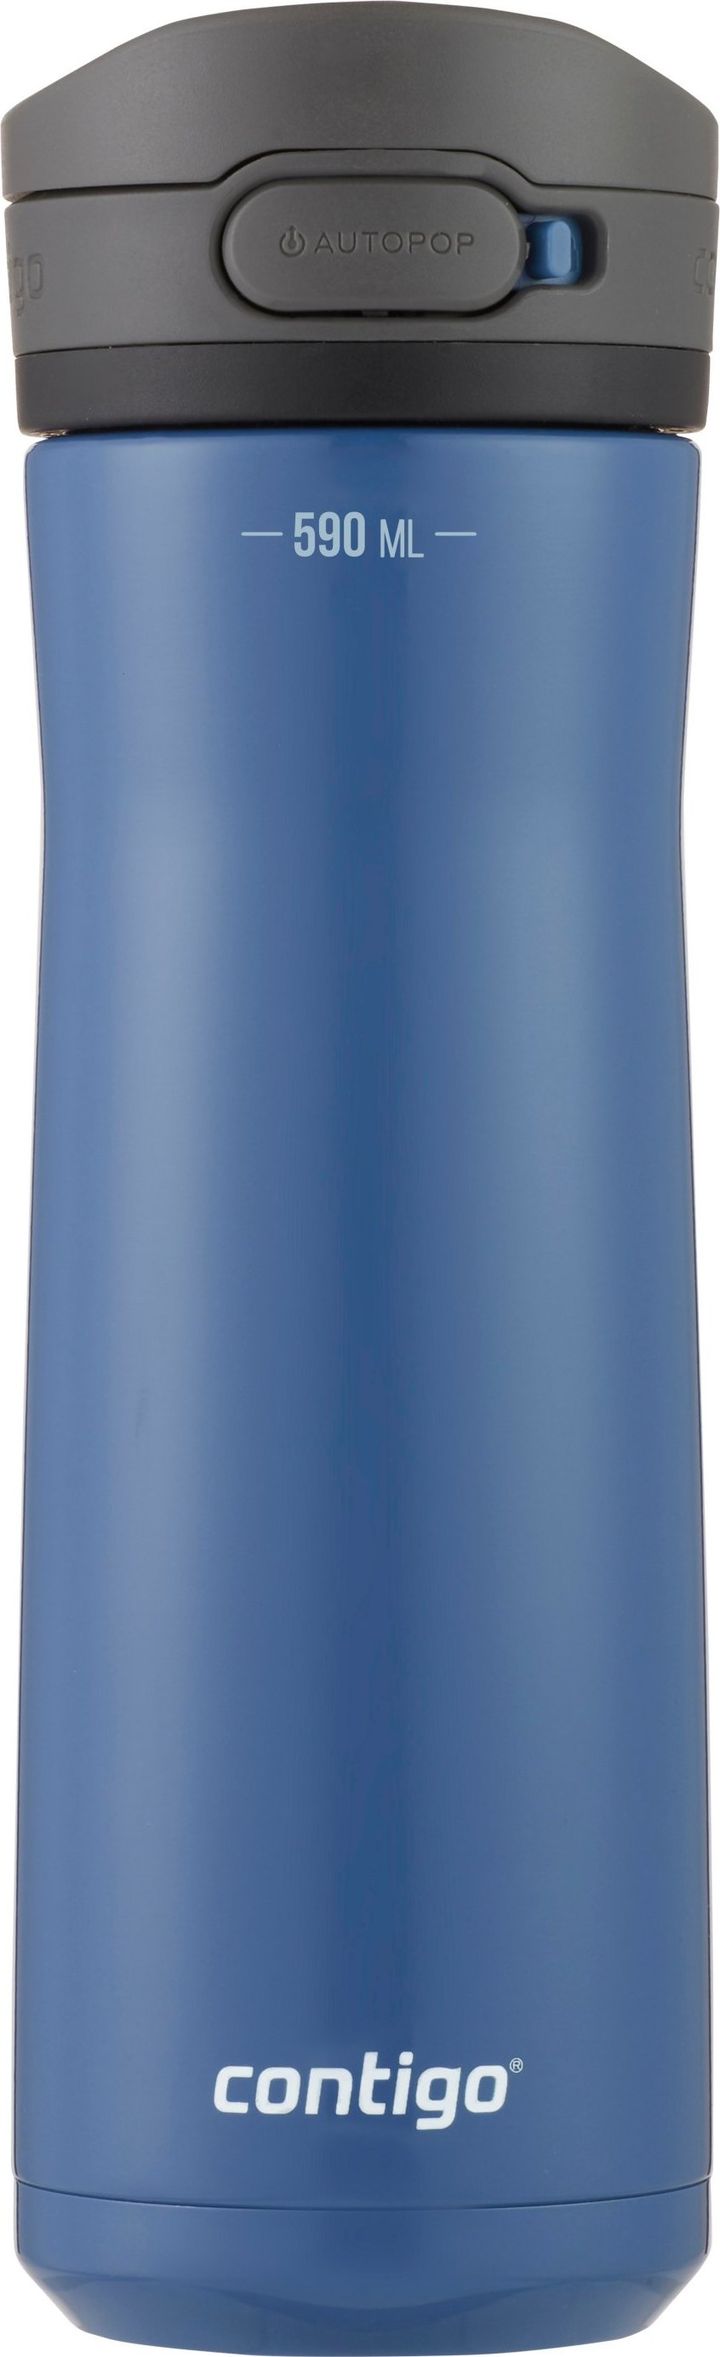 Contigo Jackson Chill Autopop Vacuum-Insulated Water Bottle 590 ml Blue Corn Contigo